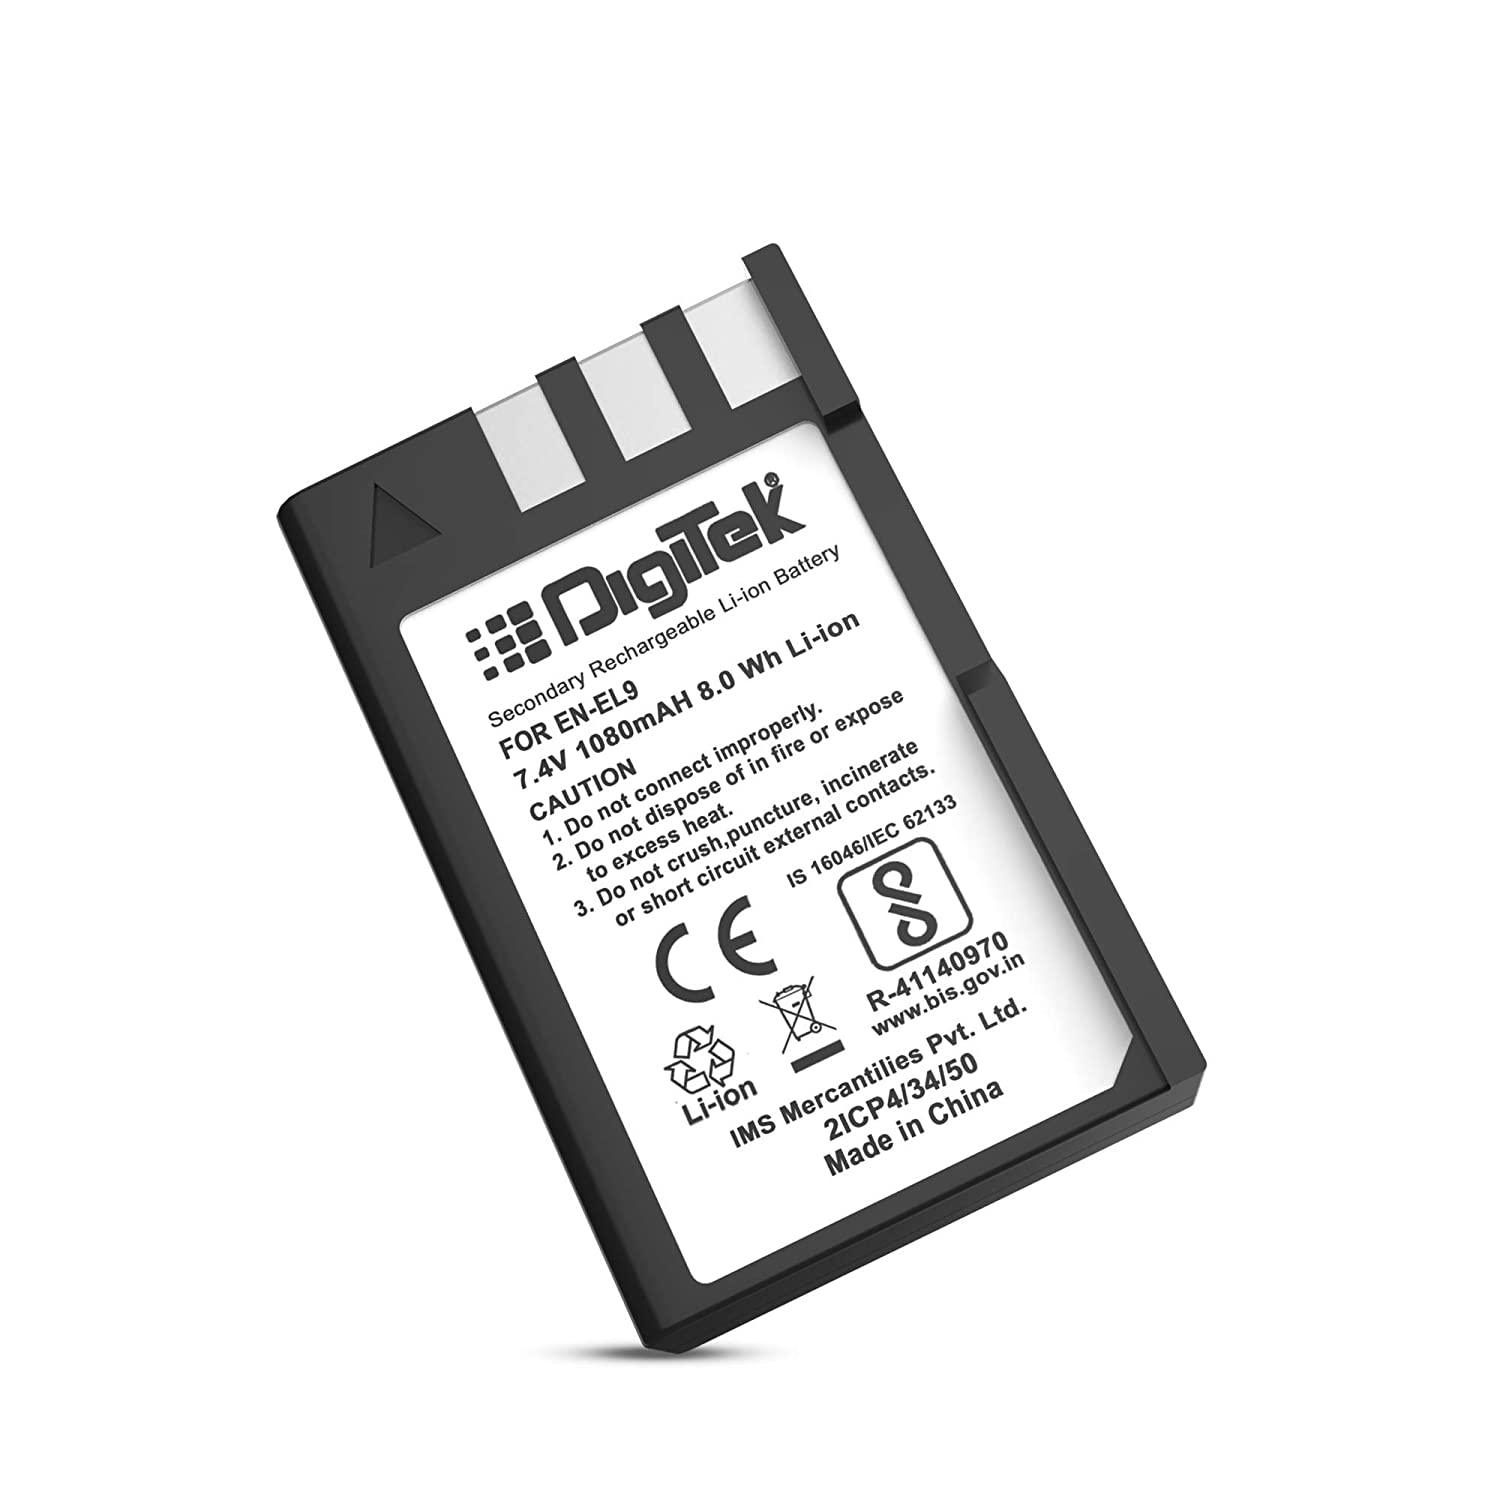 Digitek (ENEL9) 1080 mAh Secondary Rechargeable Battery Packs for Digital Camera, Compatibility - D3000, D5000, D40, D50, D60, D6R1, D3X, D40X, SLR - Digitek